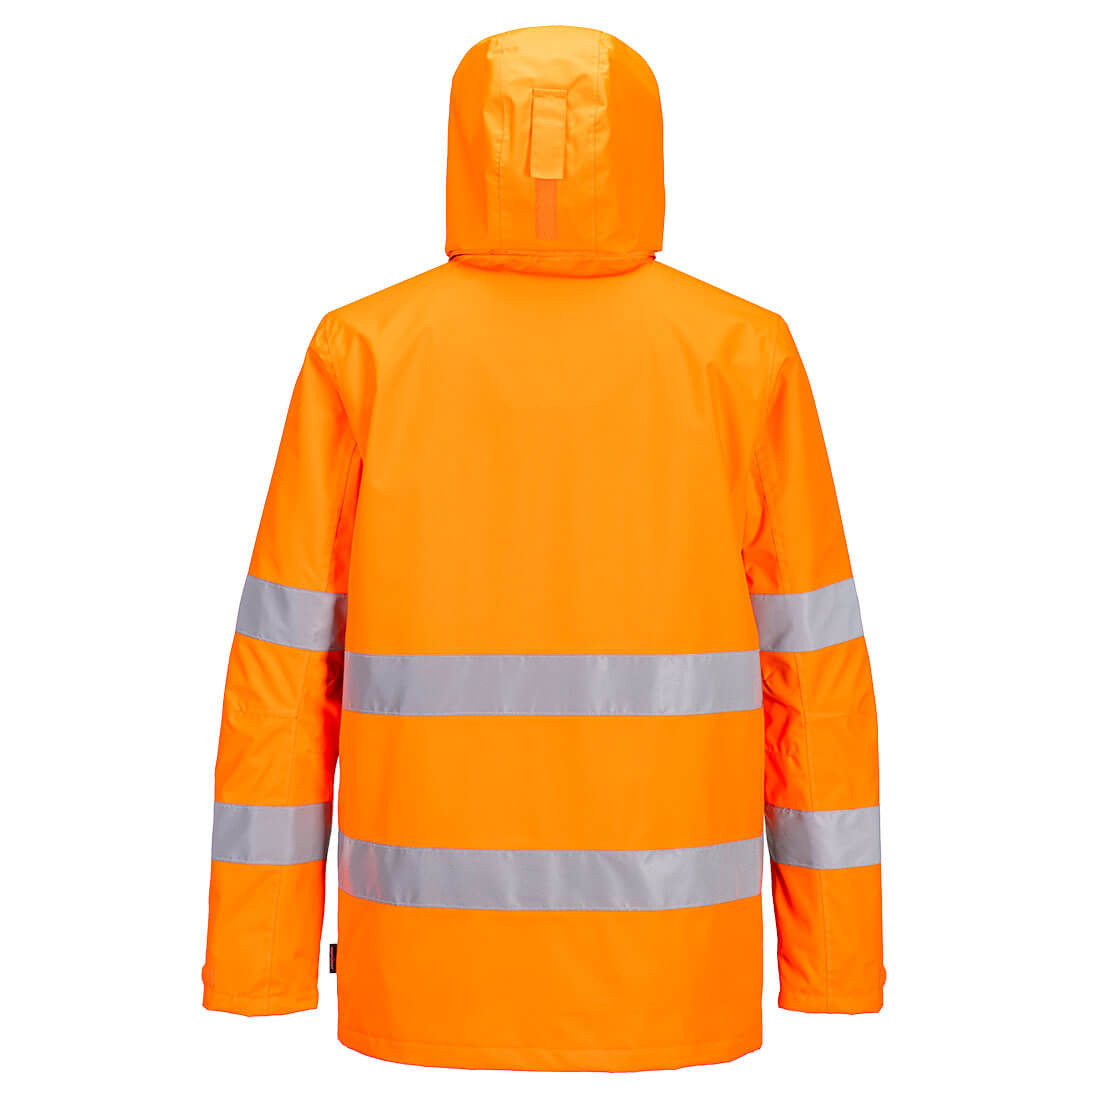 PW2 Hi-Vis Rain Jacket - Safetywear